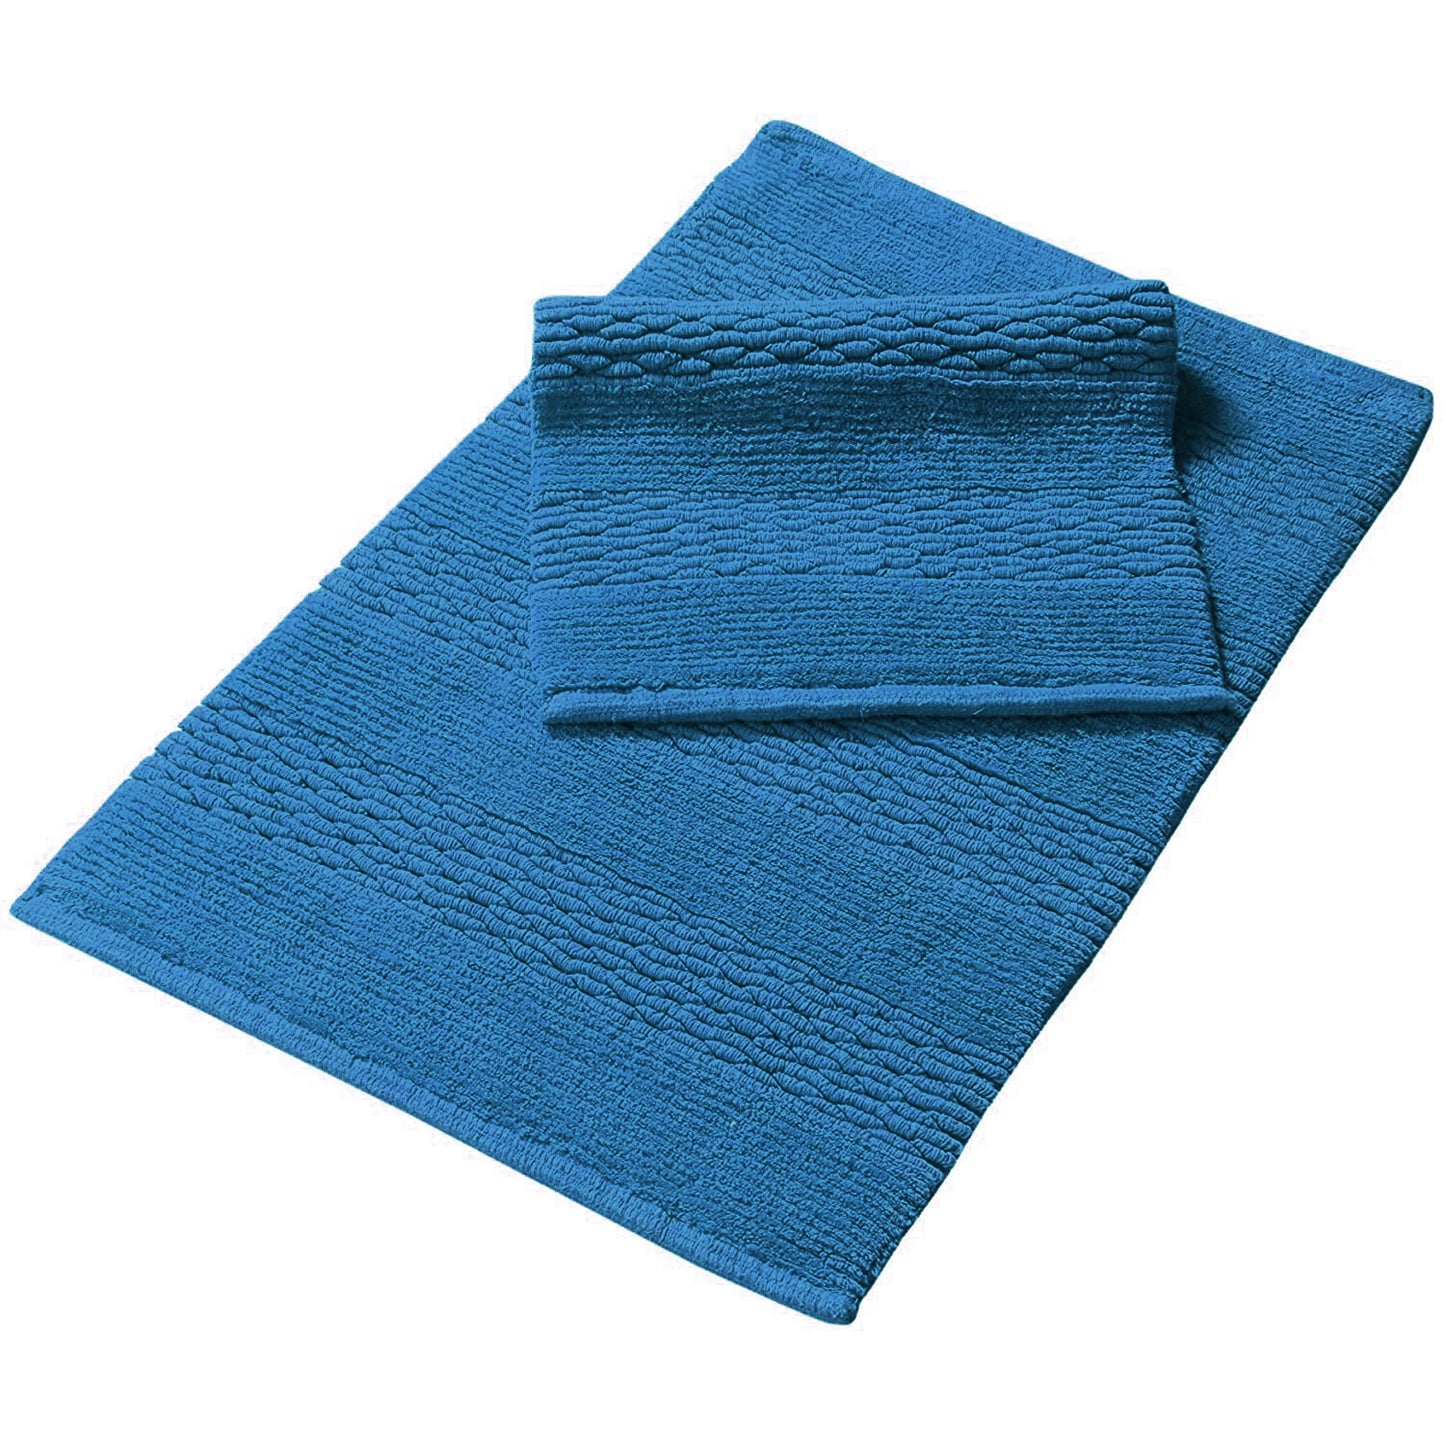 Cotton bath rugs water absorbent stripe design bathmat set of 2 - TreeWool Bathrugs#color_teal